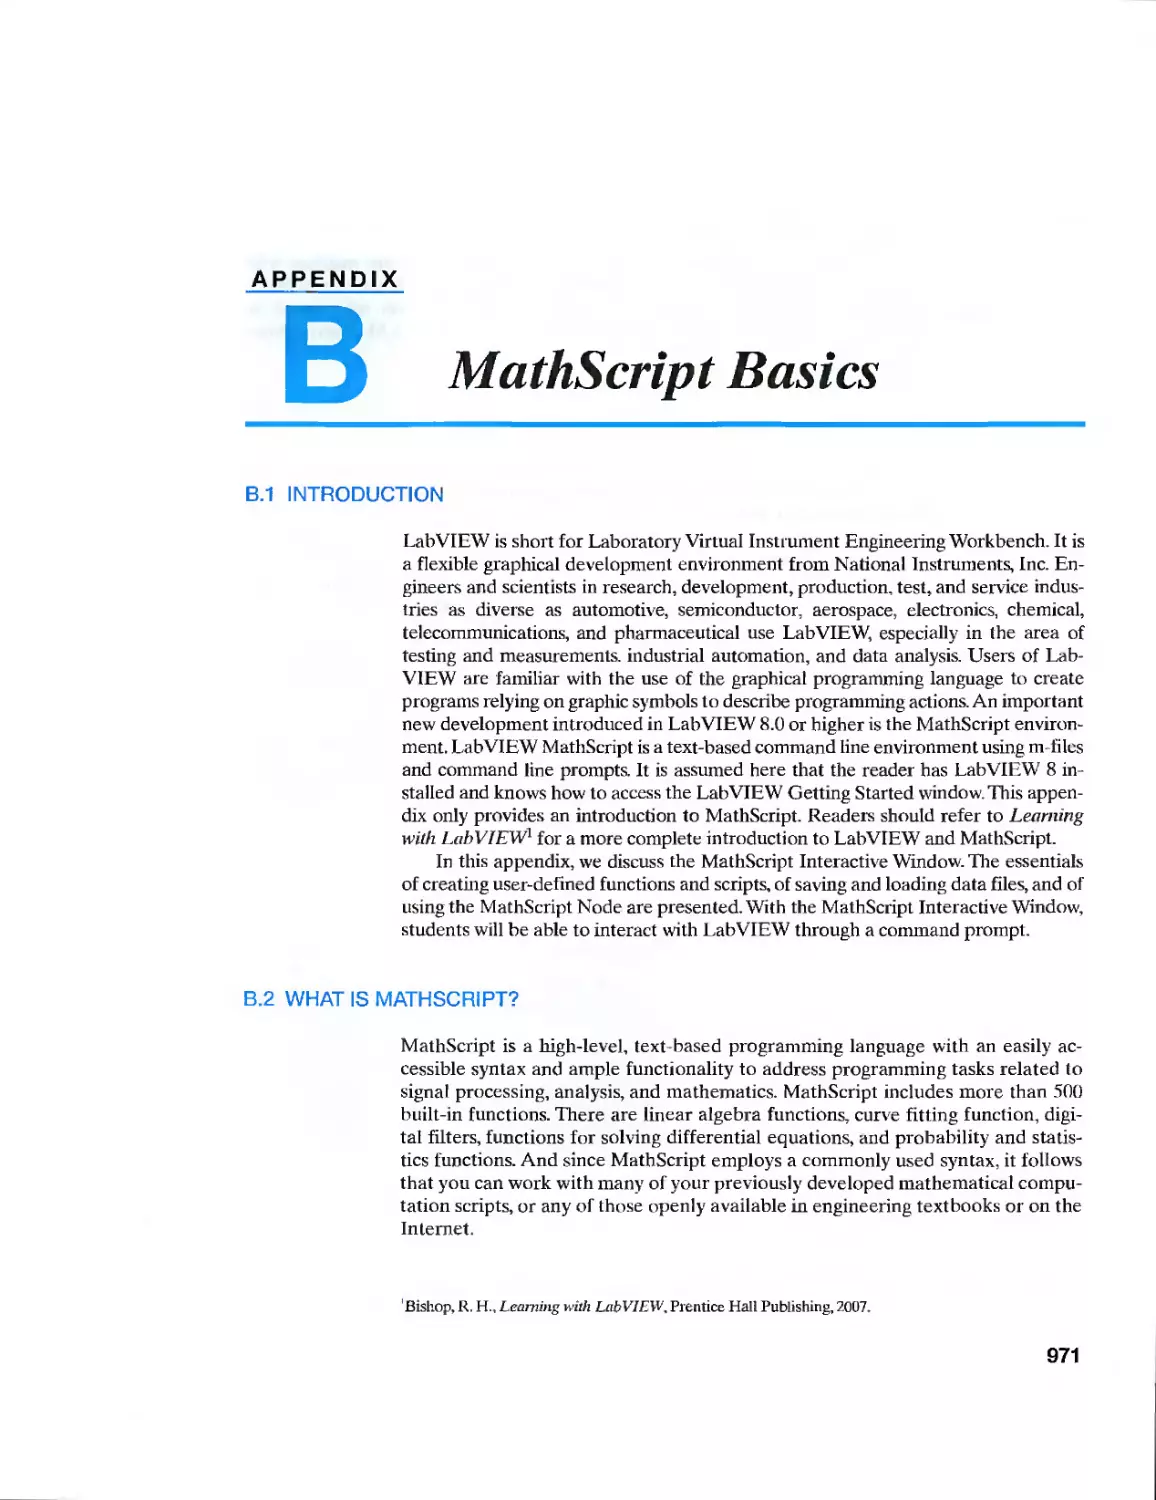 MathScript Basics